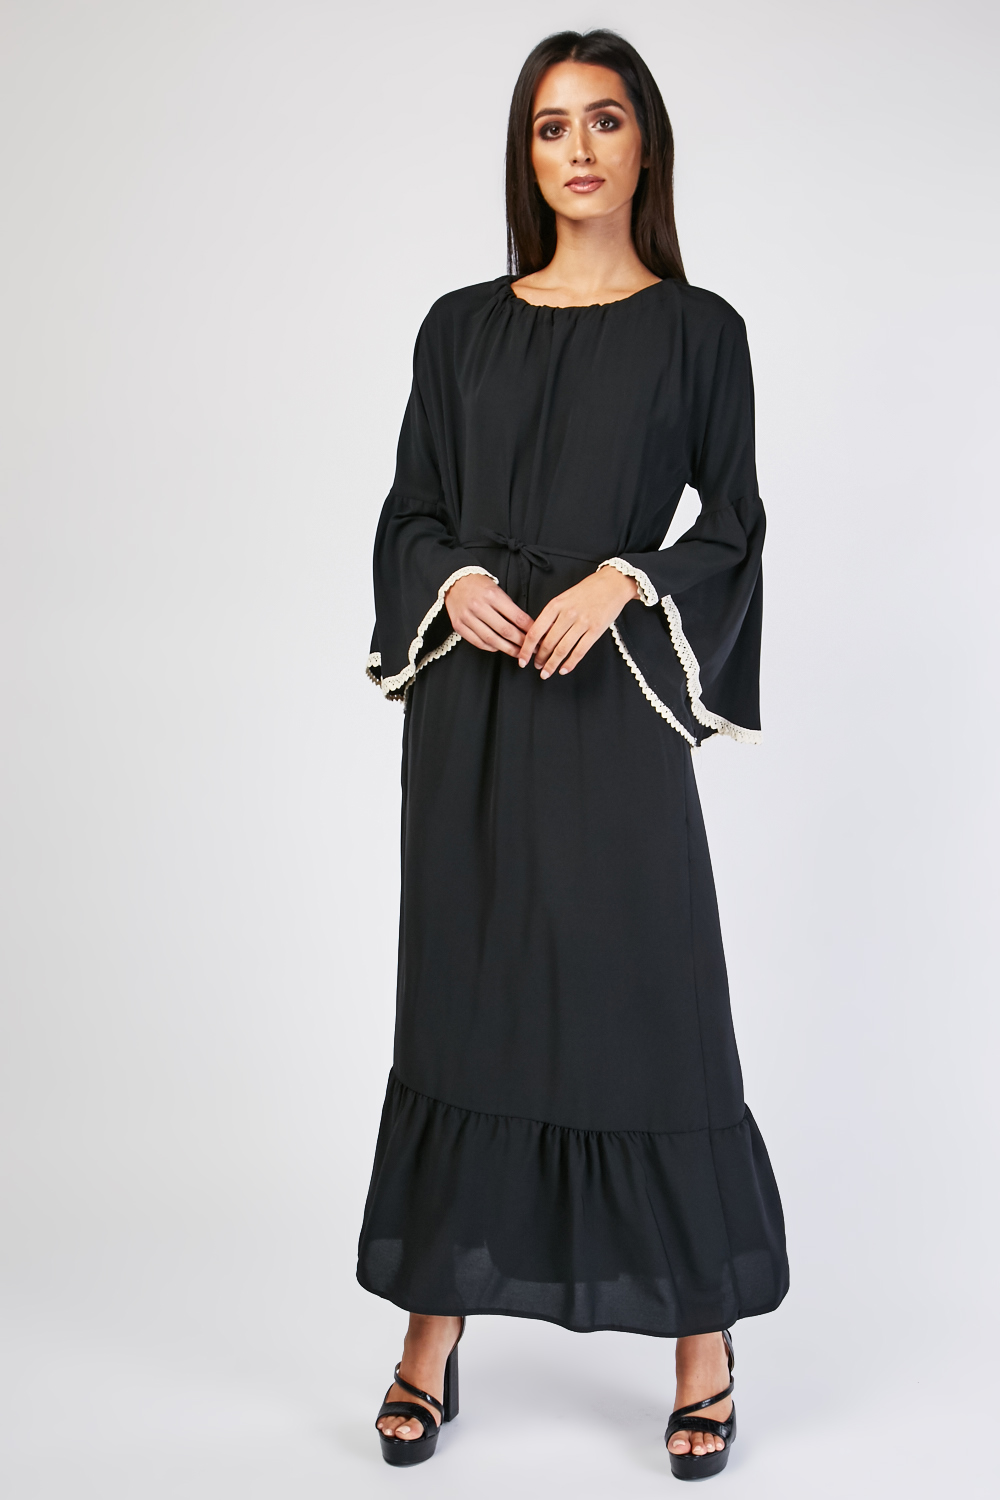 Crochet Circular Sleeve Maxi Dress - Just $6